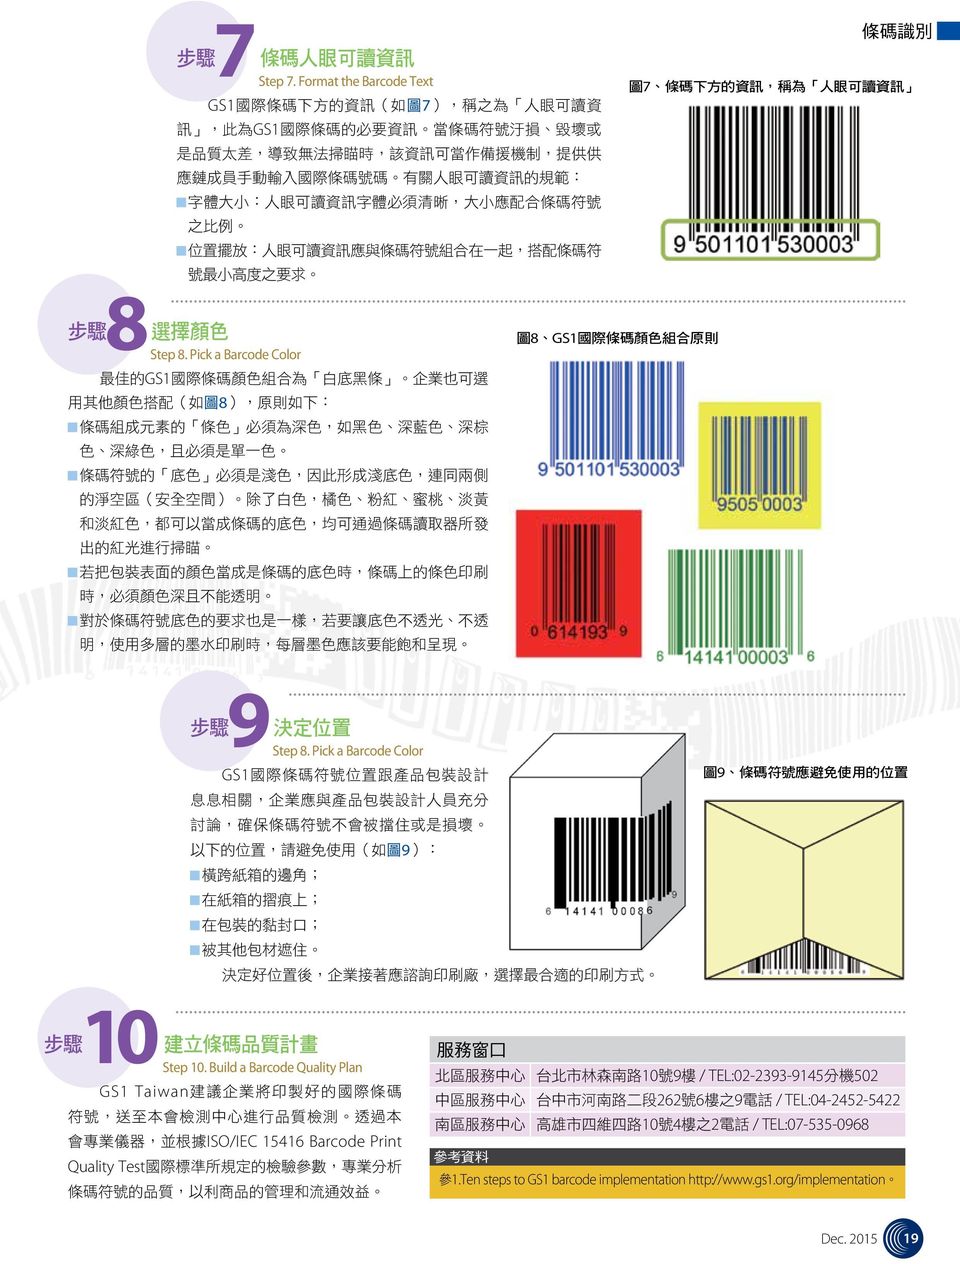 Pick a Barcode Color GS1 圖 9 圖 9 條 碼 符 號 應 避 免 使 用 的 位 置 10 步 驟 建 立 條 碼 品 質 計 畫 Step 10.